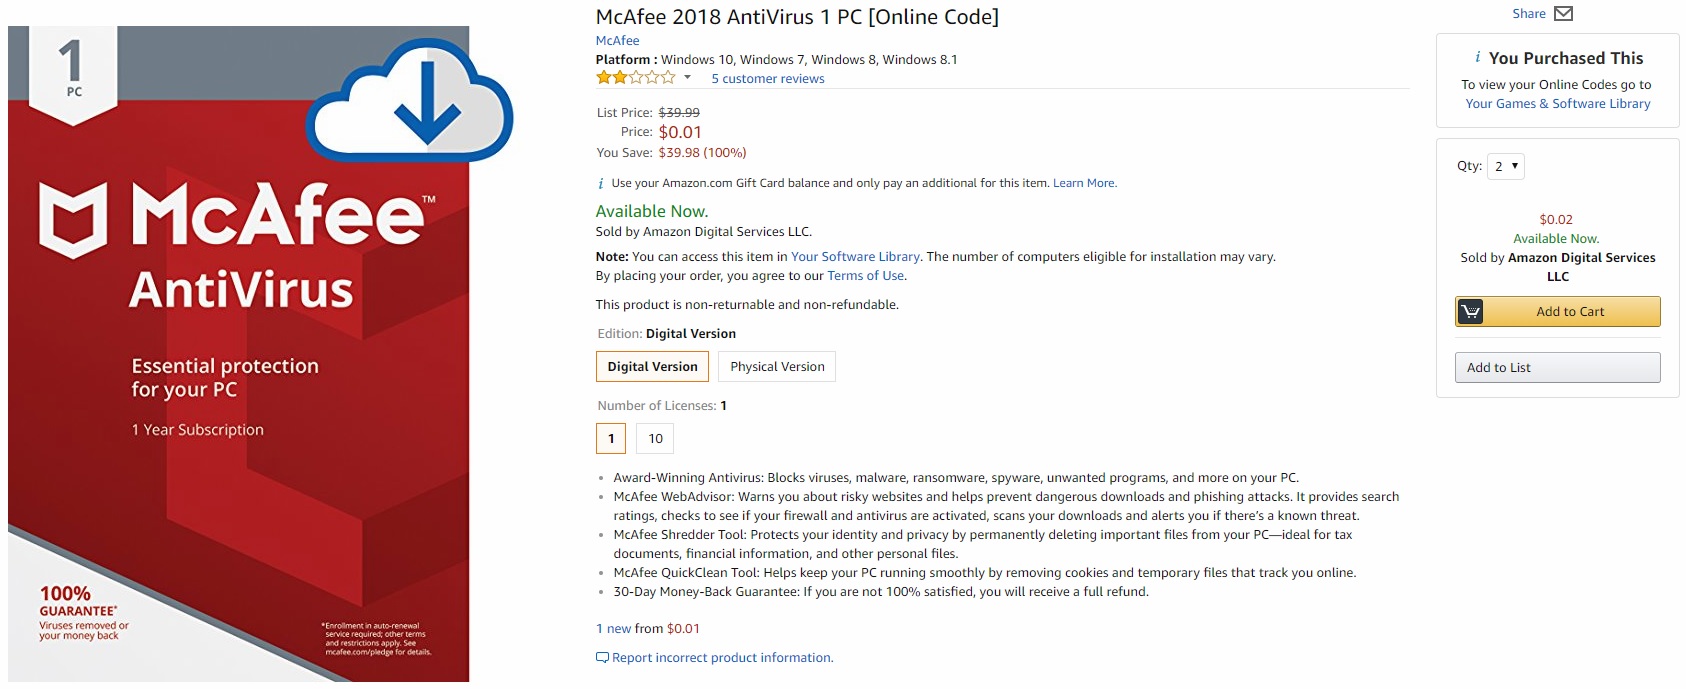 McAfee 2018 AntiVirus 1 PC [Online Code] 0.1$.jpg